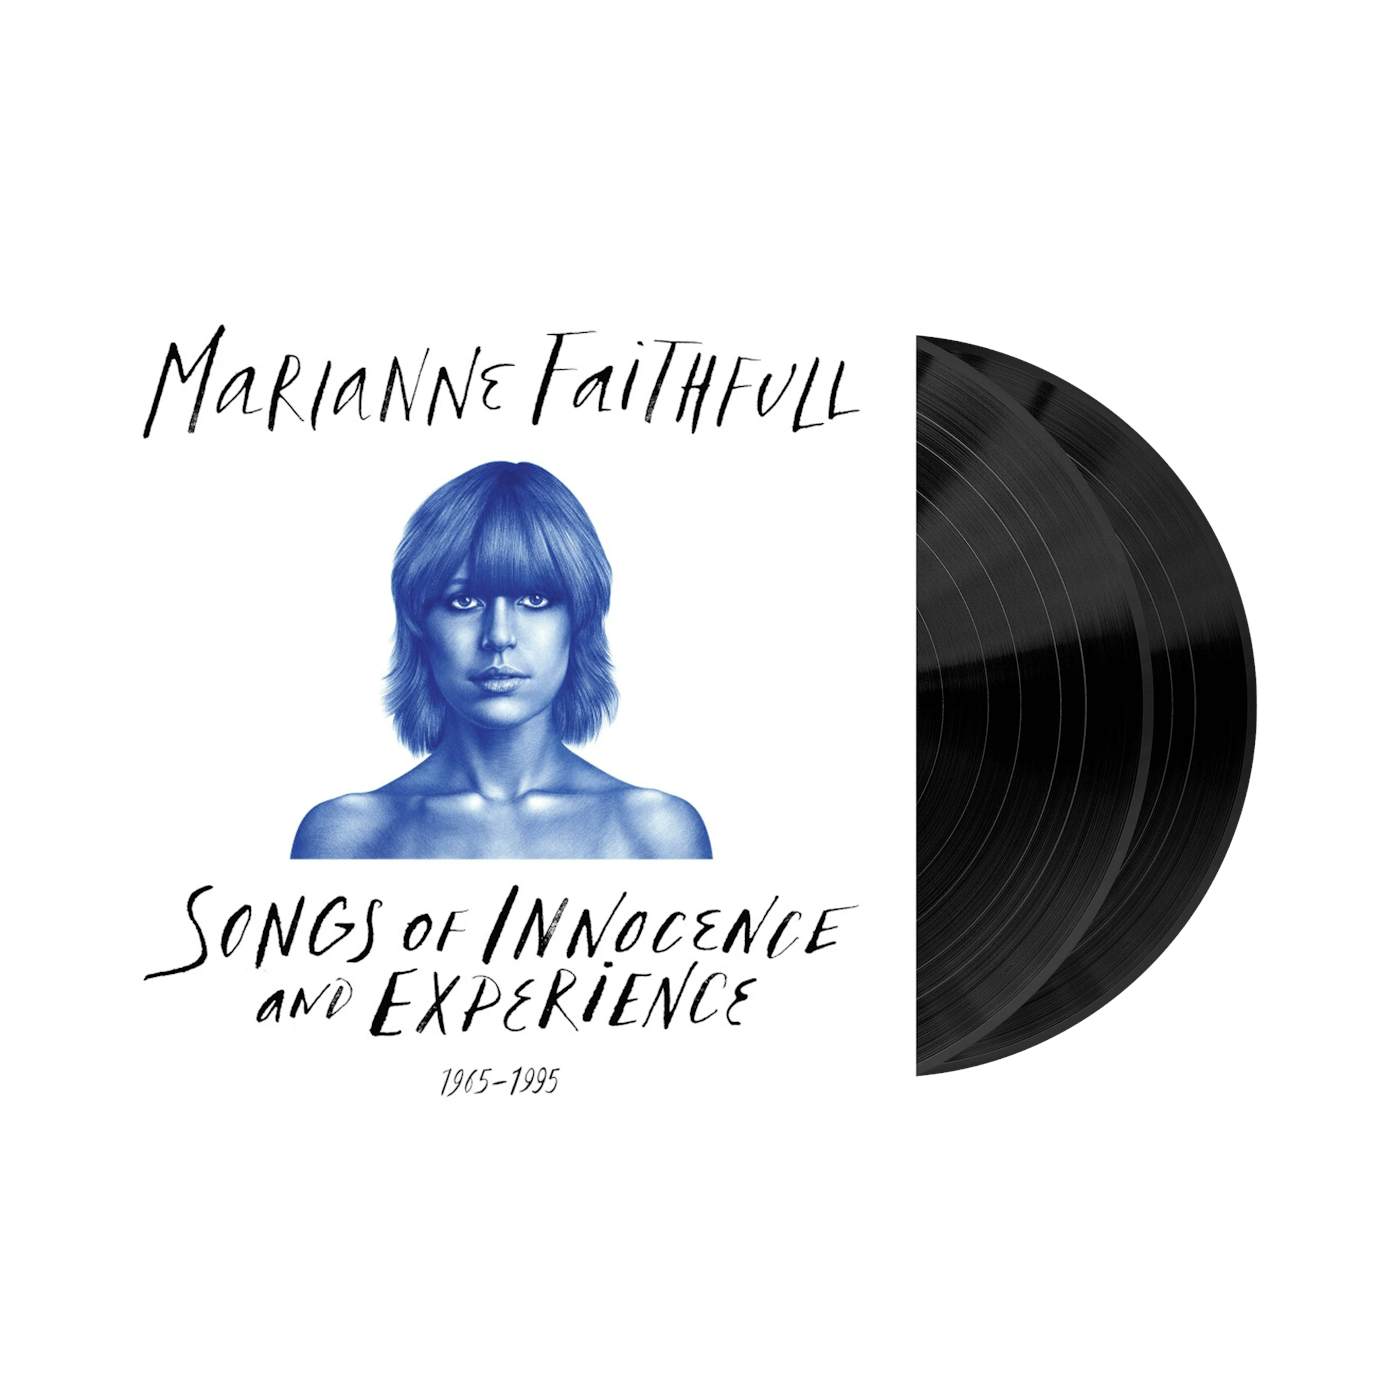 Marianne Faithfull - Songs Of Innocence and Experience 1965-1995 LP (Vinyl)